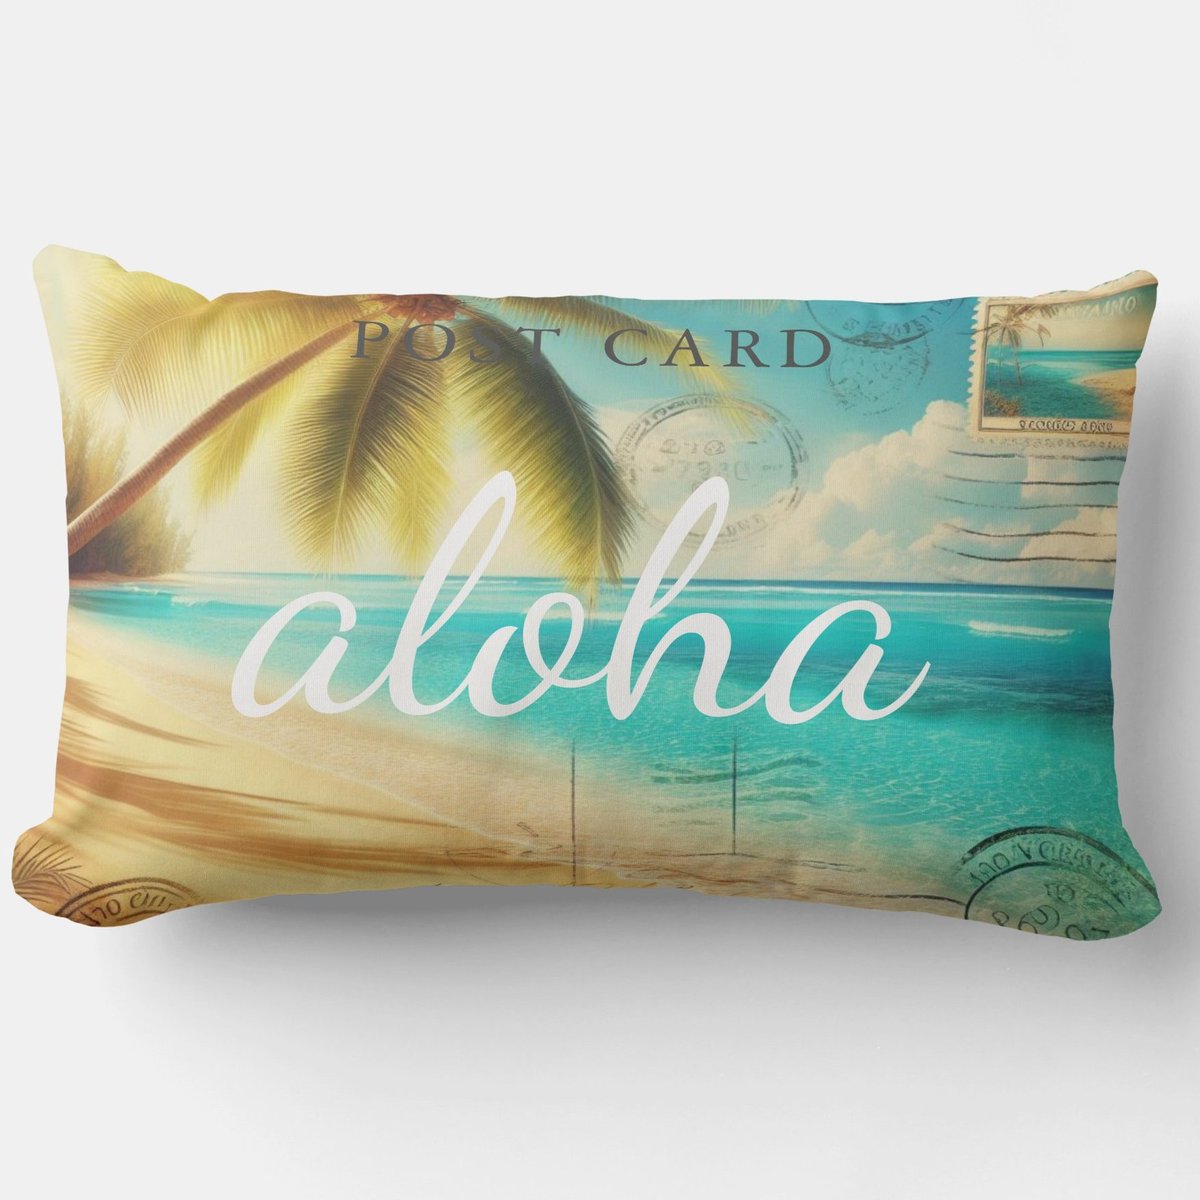 Aloha Hawaiian Pillow zazzle.com/aloha_hawaiian… via @zazzle #pillows #pillow #ThrowPillow #uniquehome #giftidea #uniquegifts #homedecor #retro #vintage #eastergift #Hawaii #interiordesign #beach #Wednesdayvibe #giftideas #aloha #summer Transform your home into a #tropical #paradise